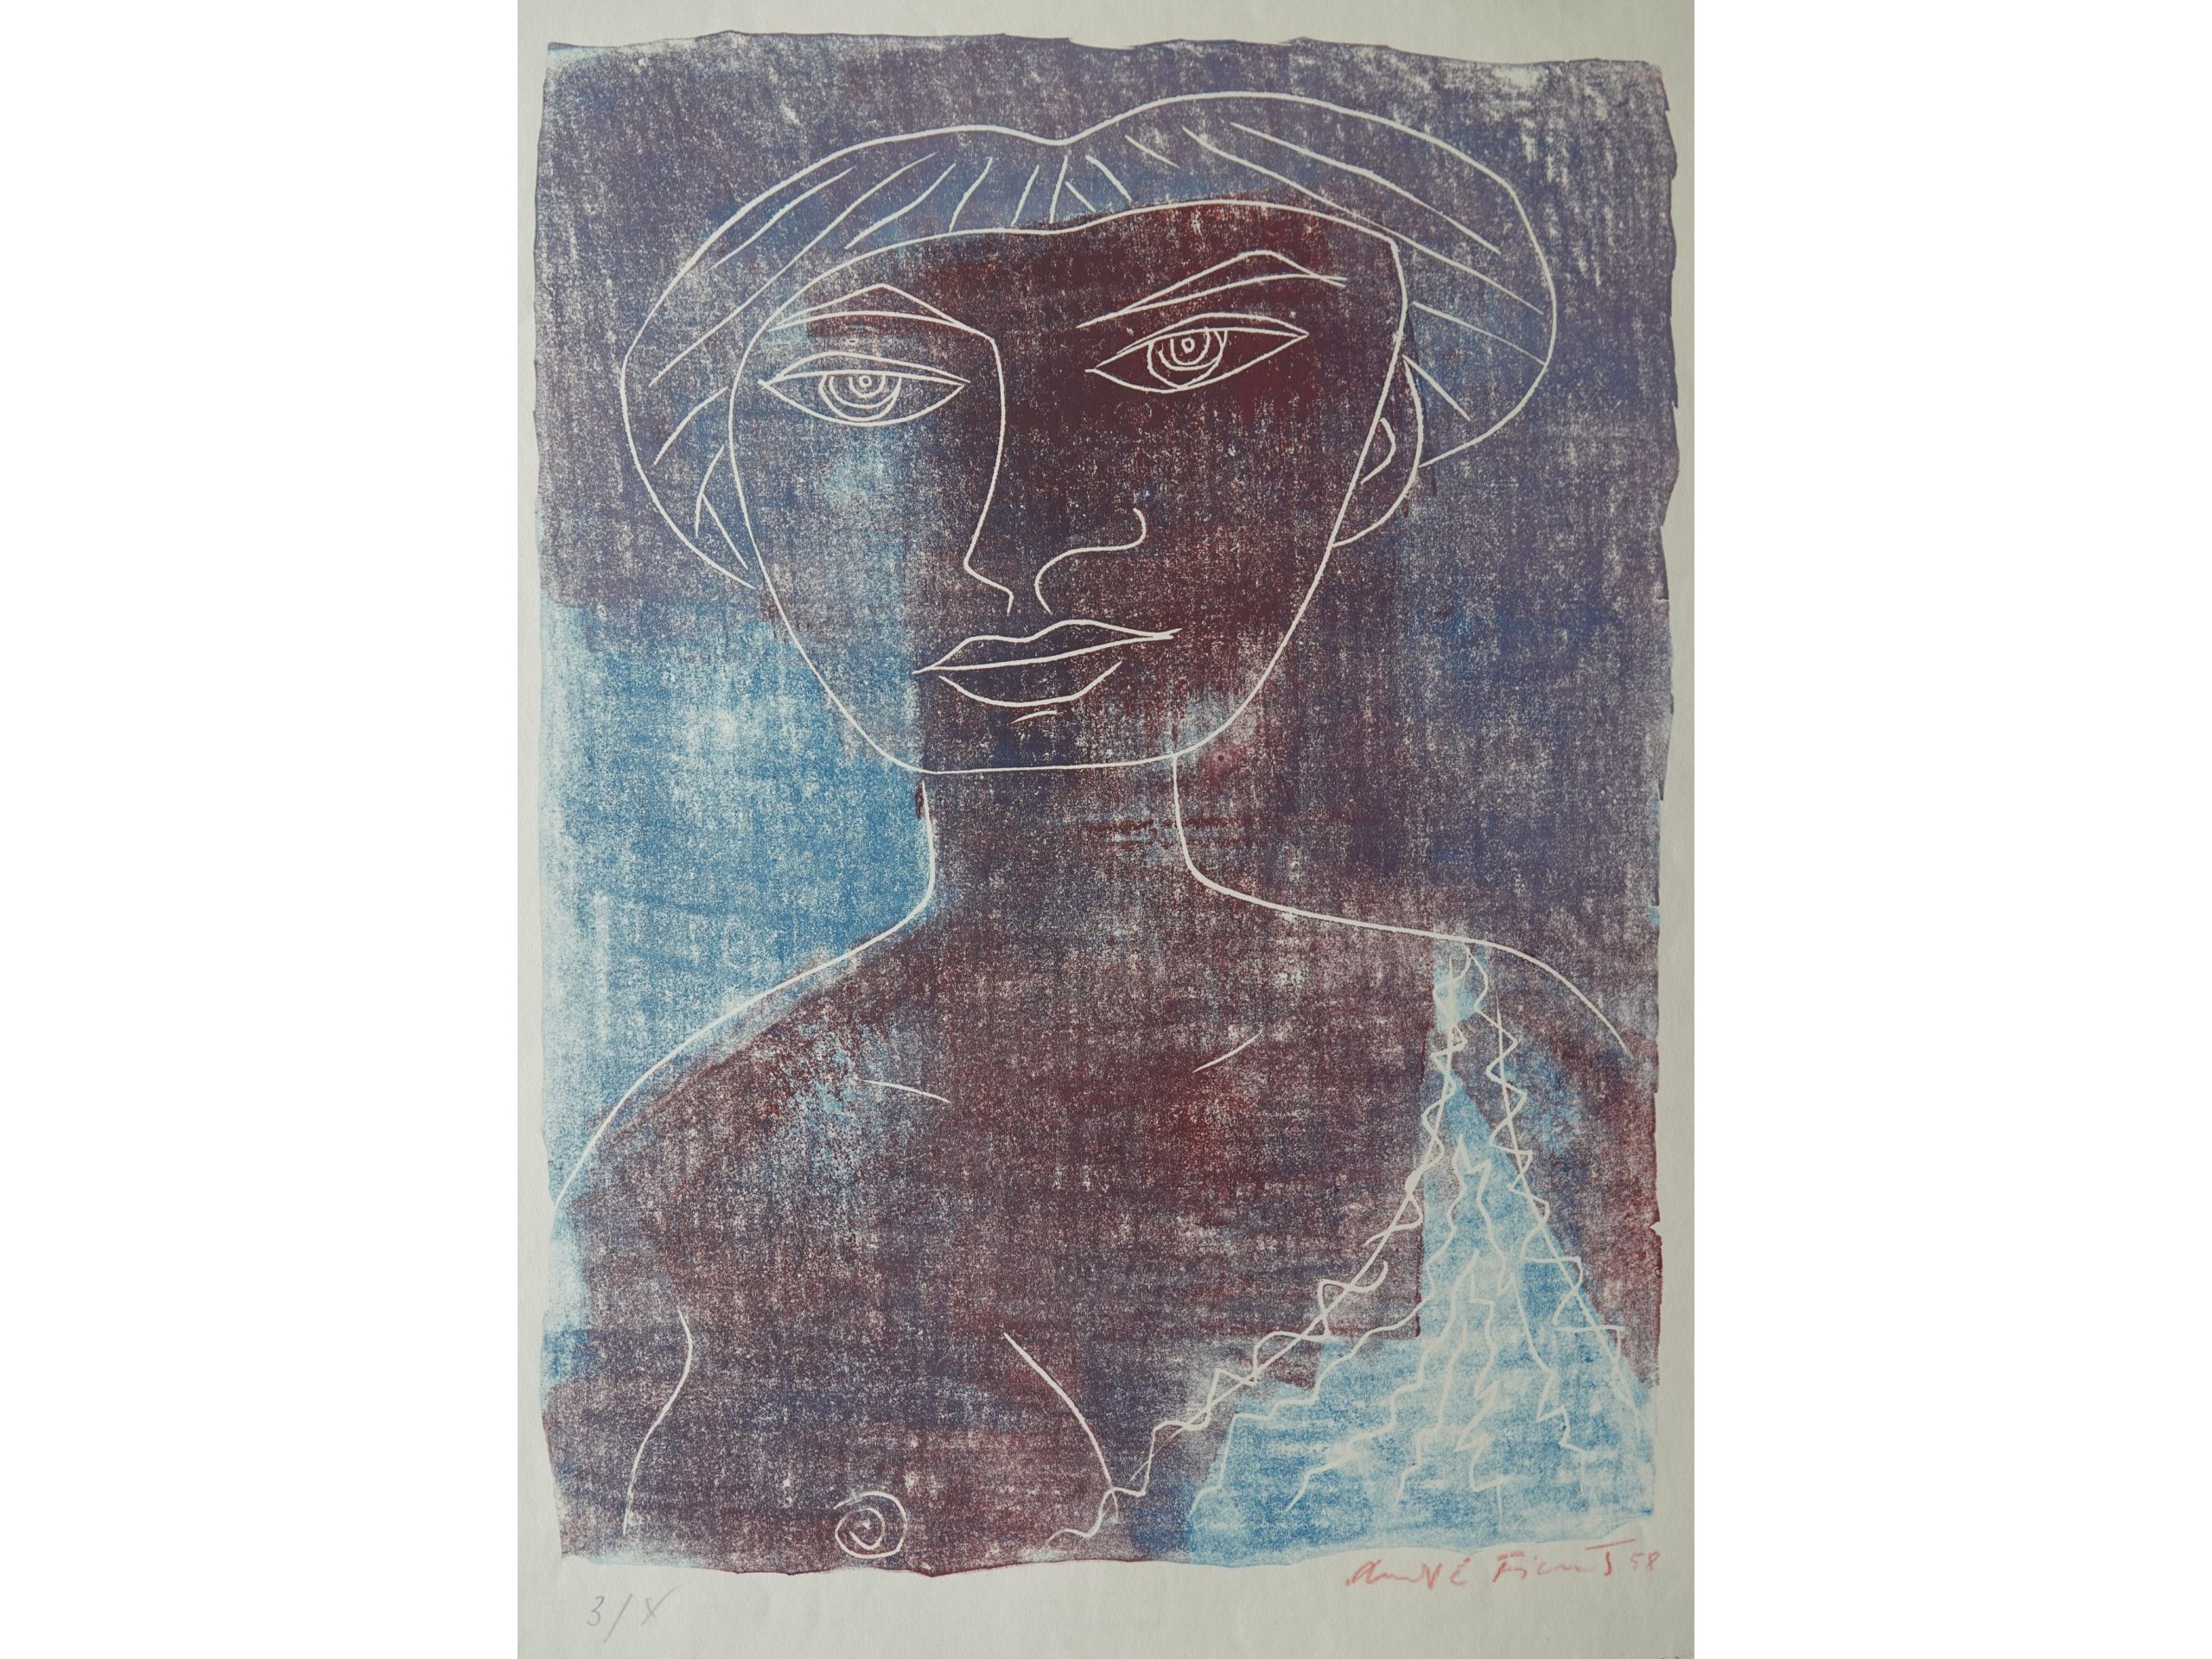 André Ficus, 'Junge Frau im Hemd', 1958, Linolschnitt, 40 x 30 cm, 150 € 